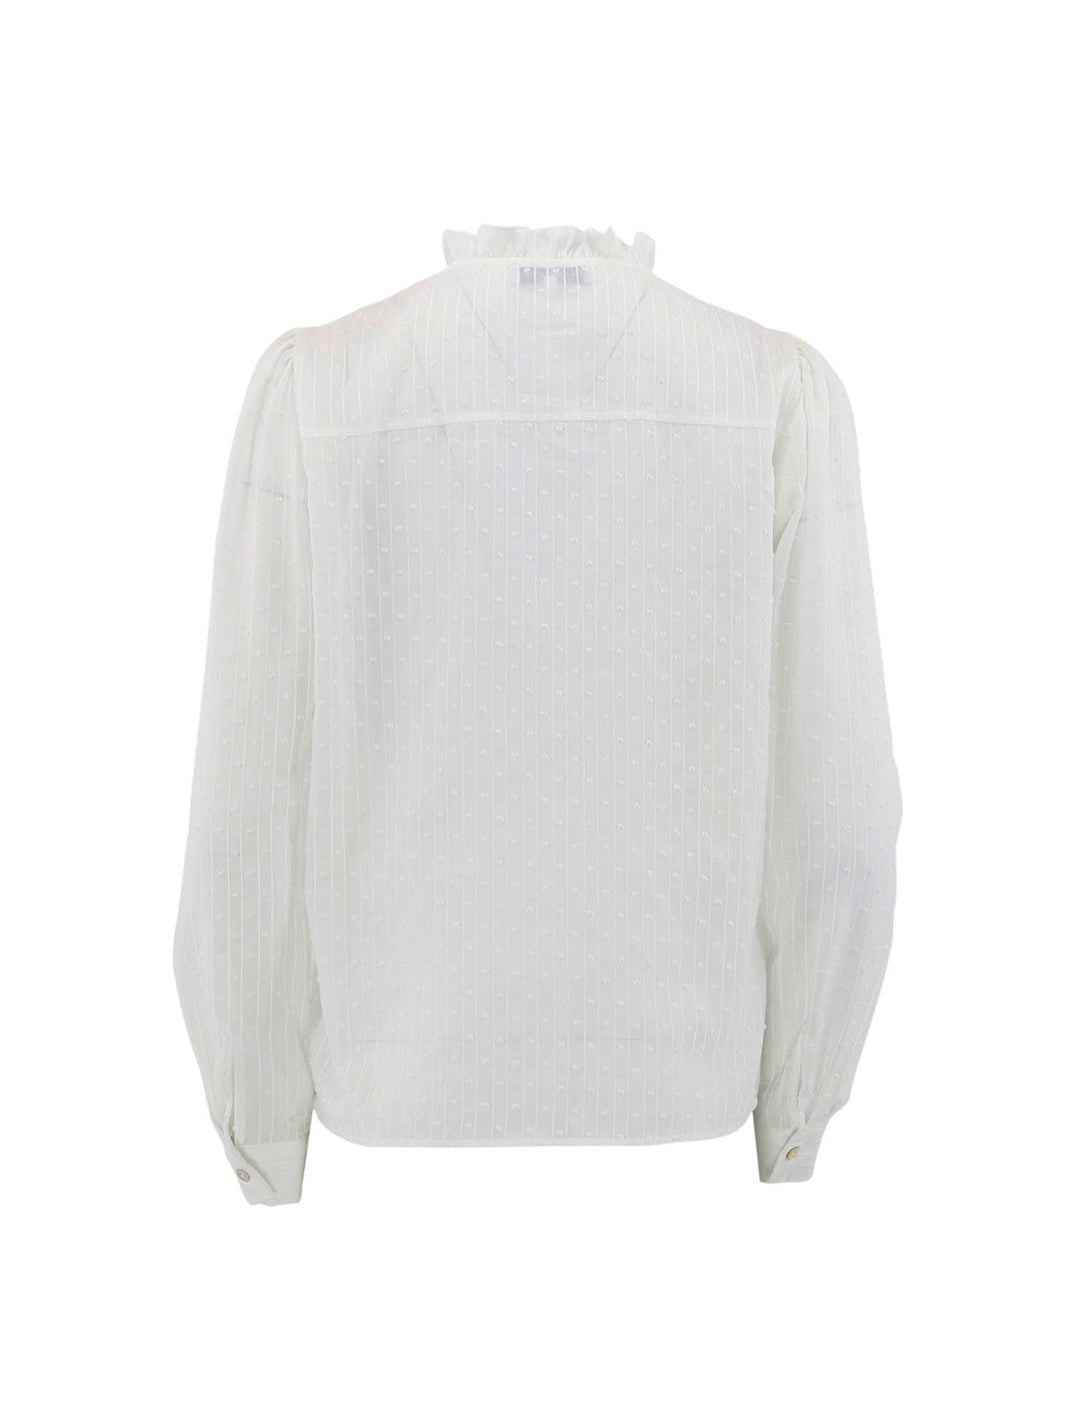 Continue Mili blue stripe shirt white - Online-Mode